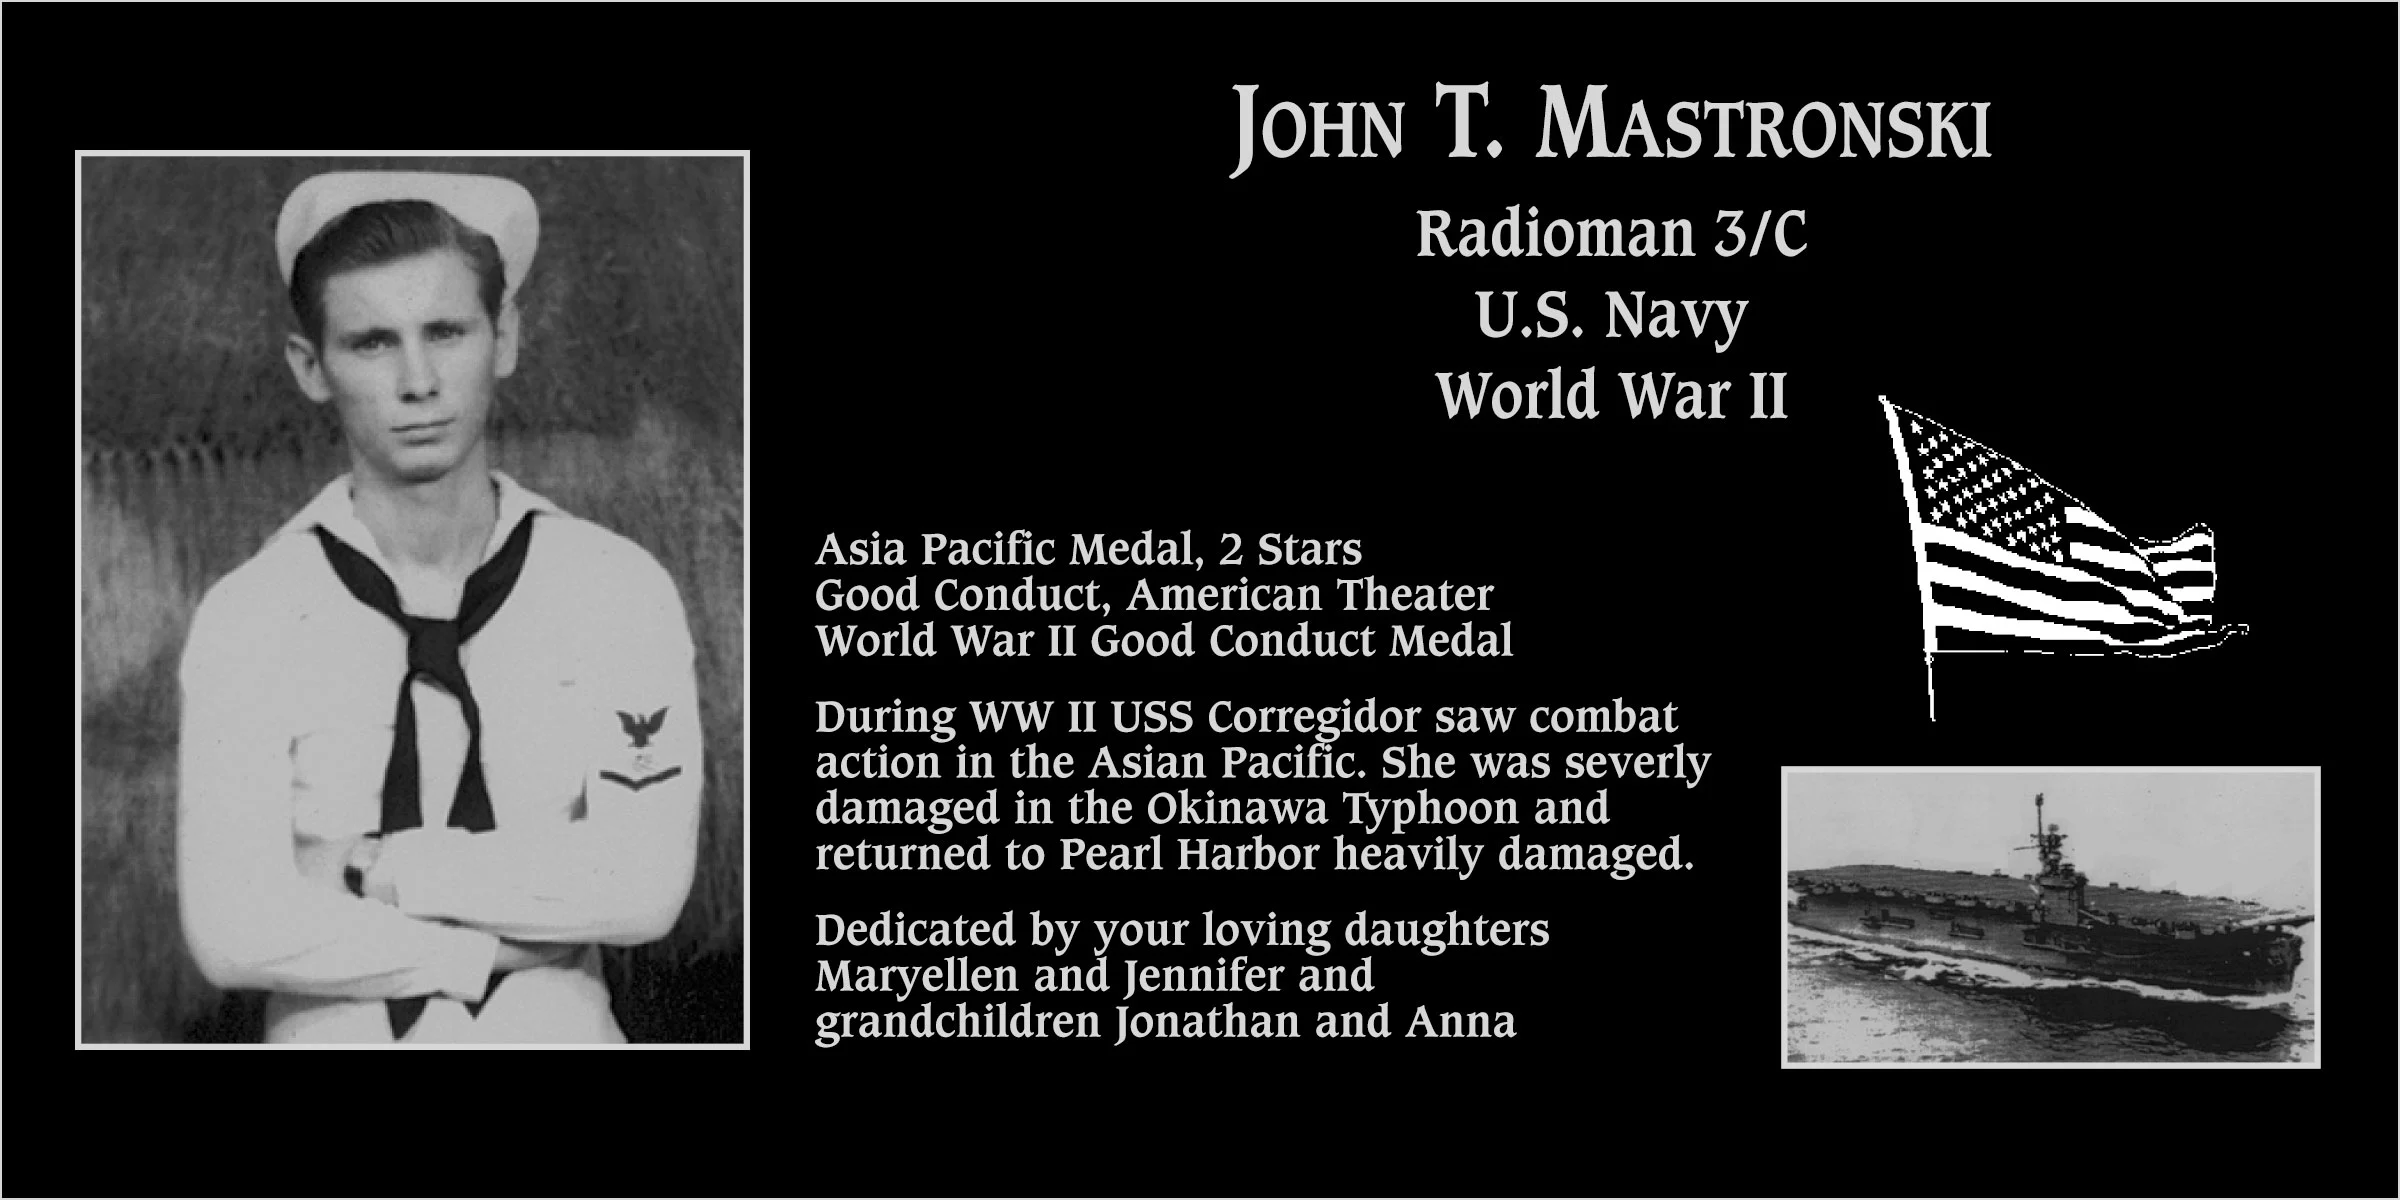 John T. Mastronski